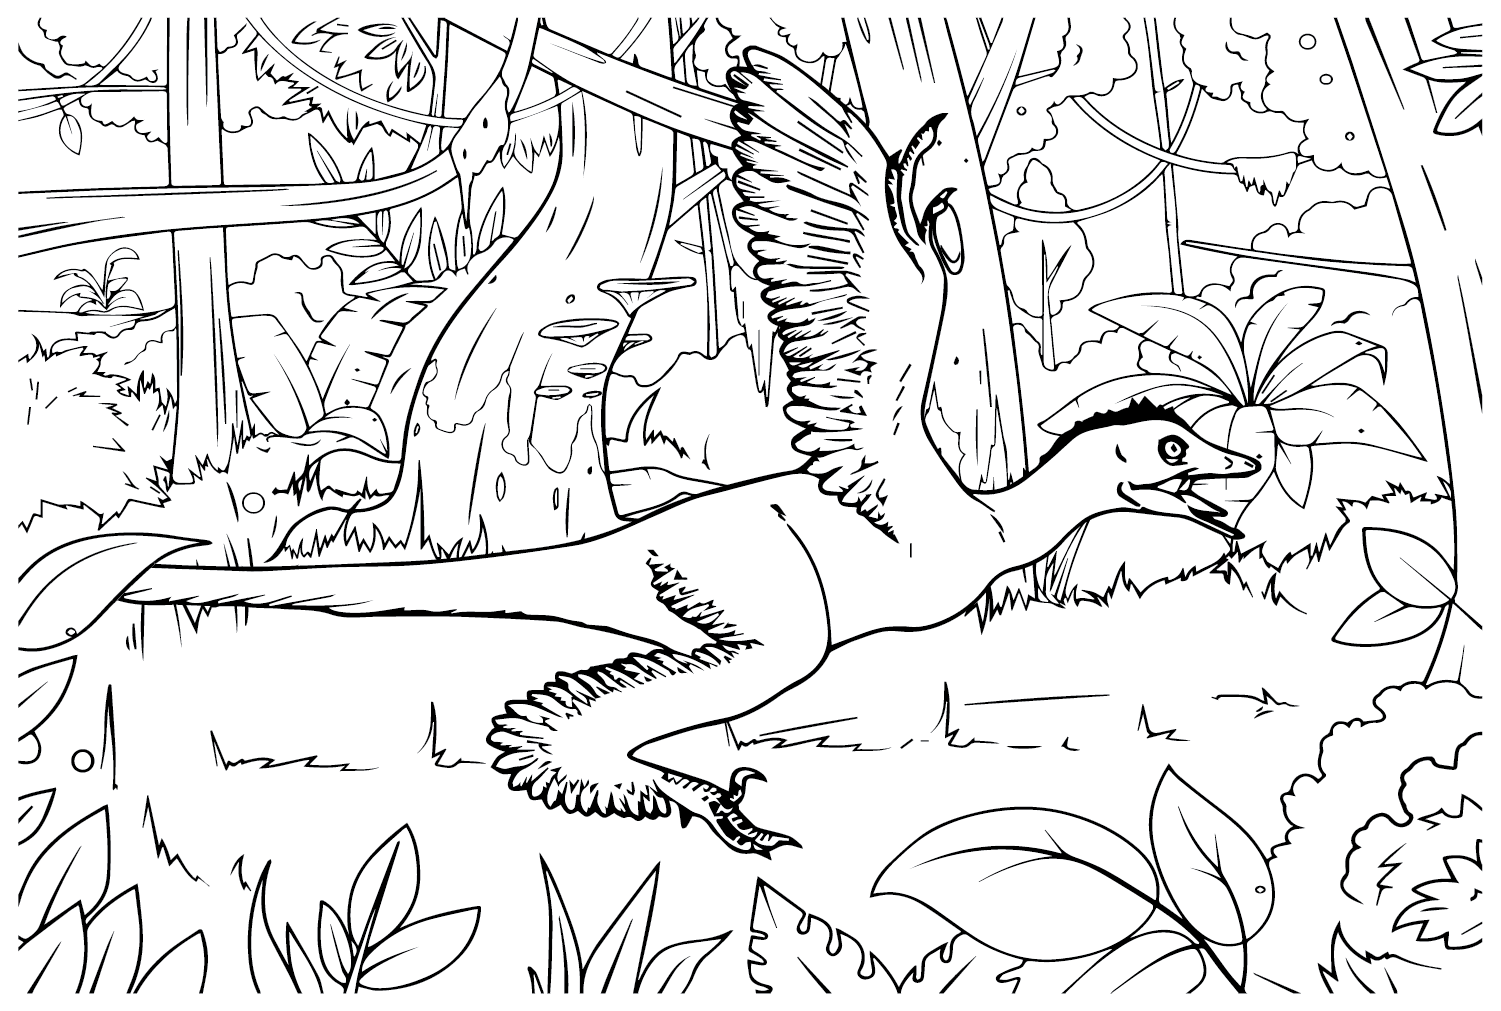 Utahraptor Coloring Page PDF from Dinosaurs